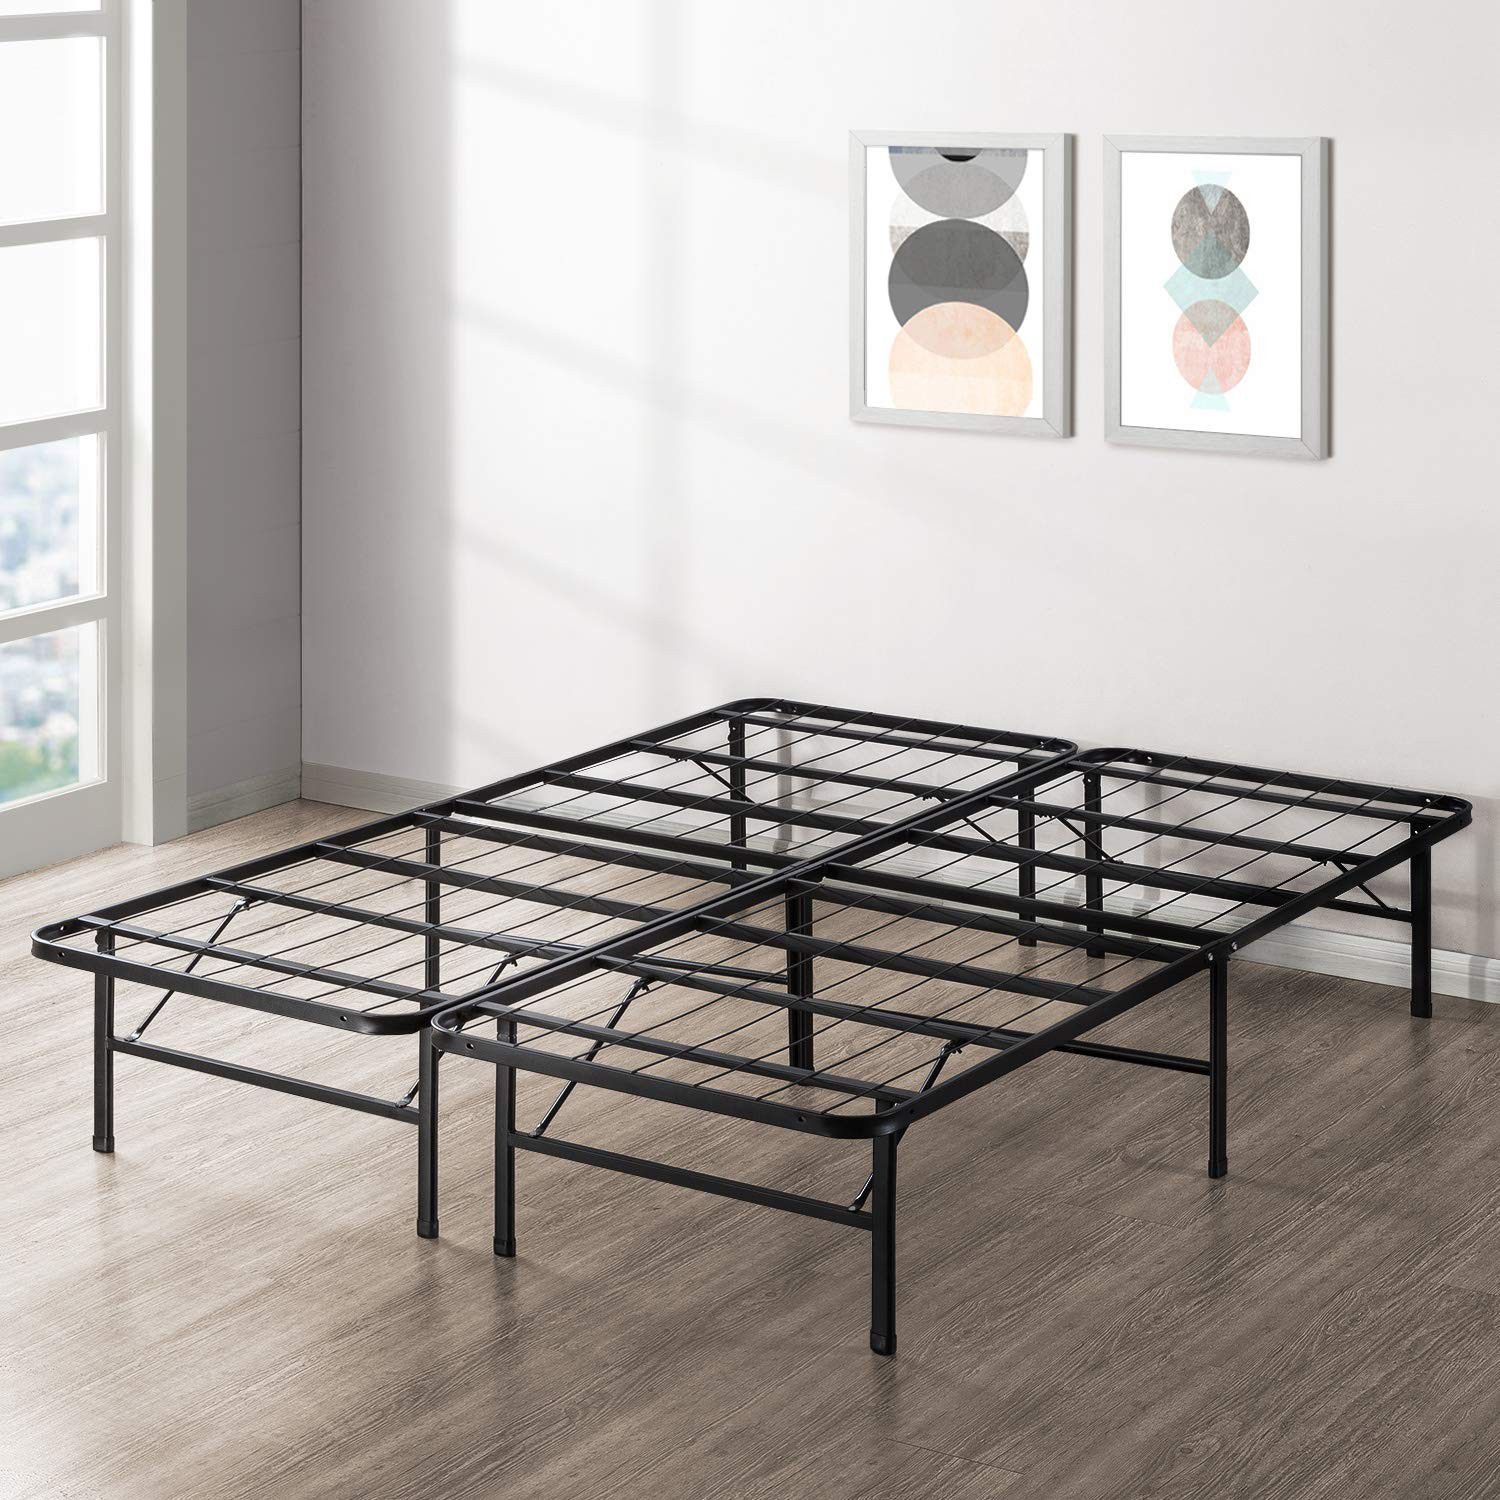 Queen size metal bed frame